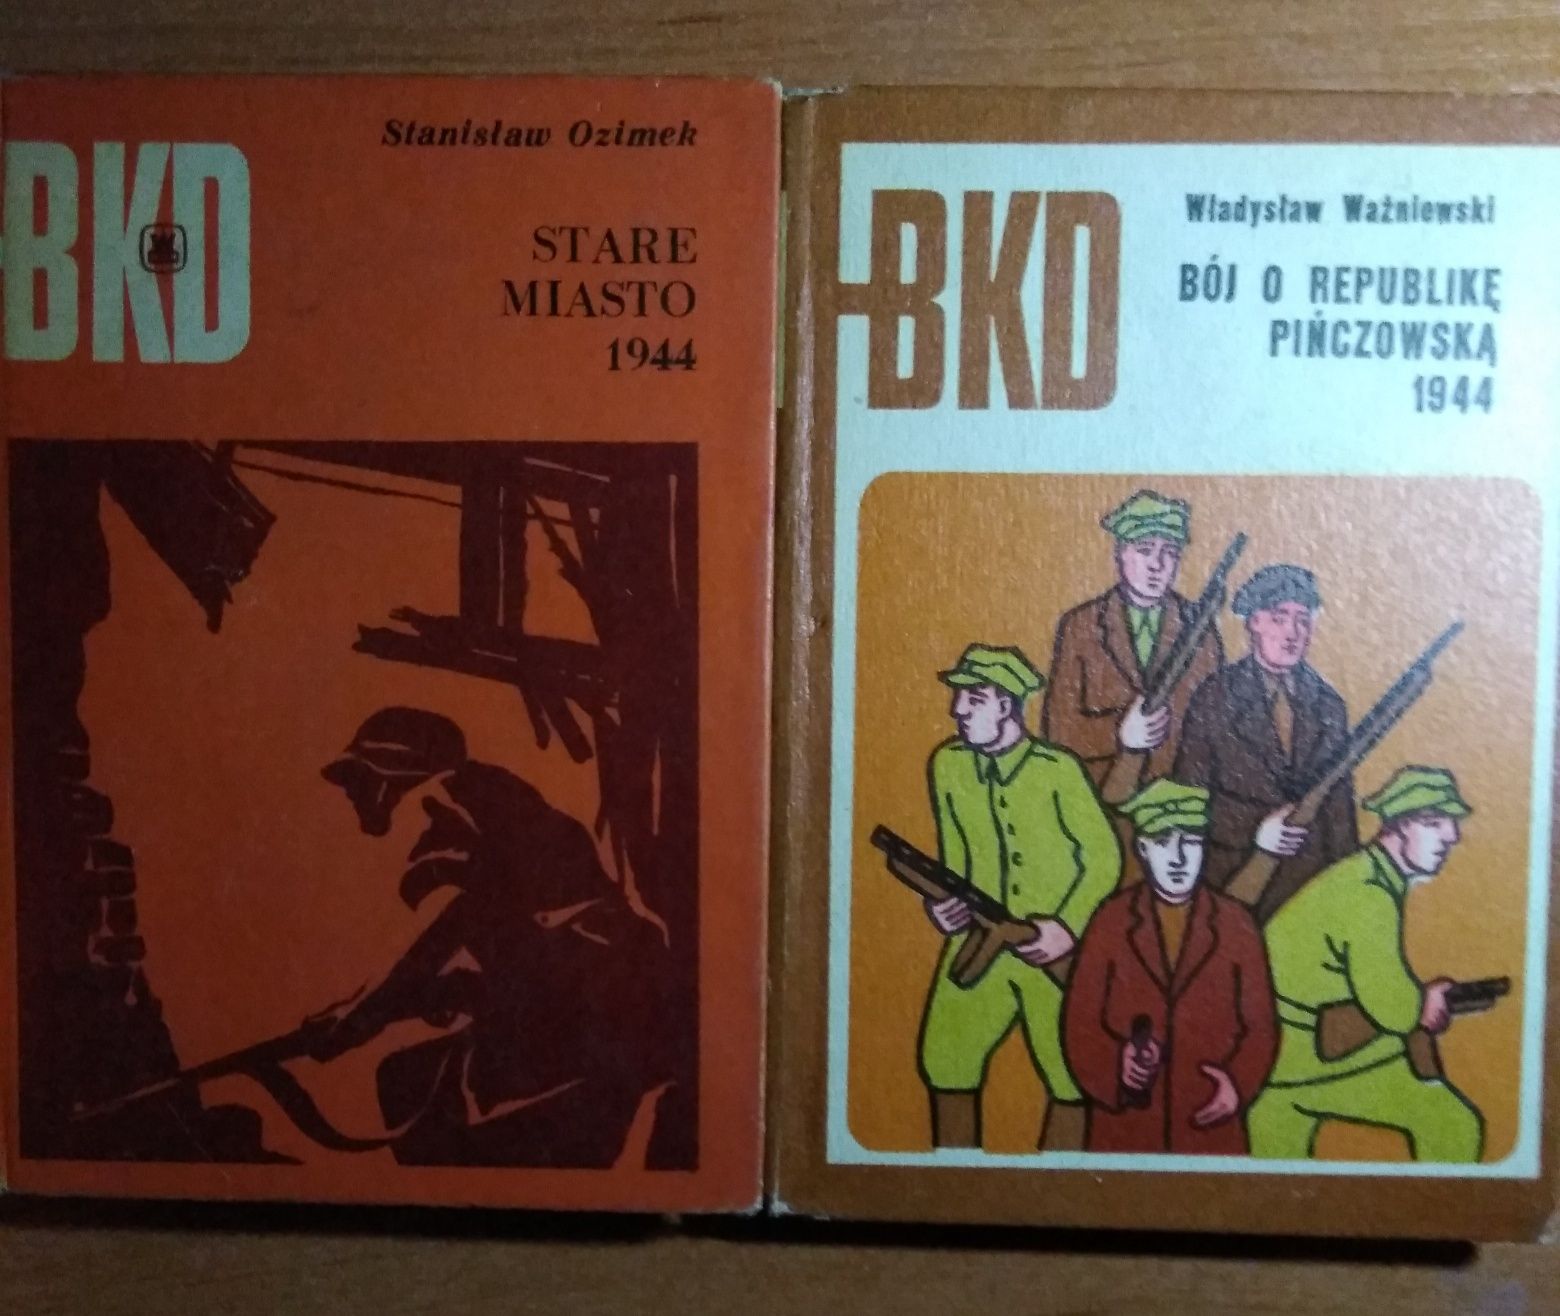 Książki z serii BKD - 10 sztuk